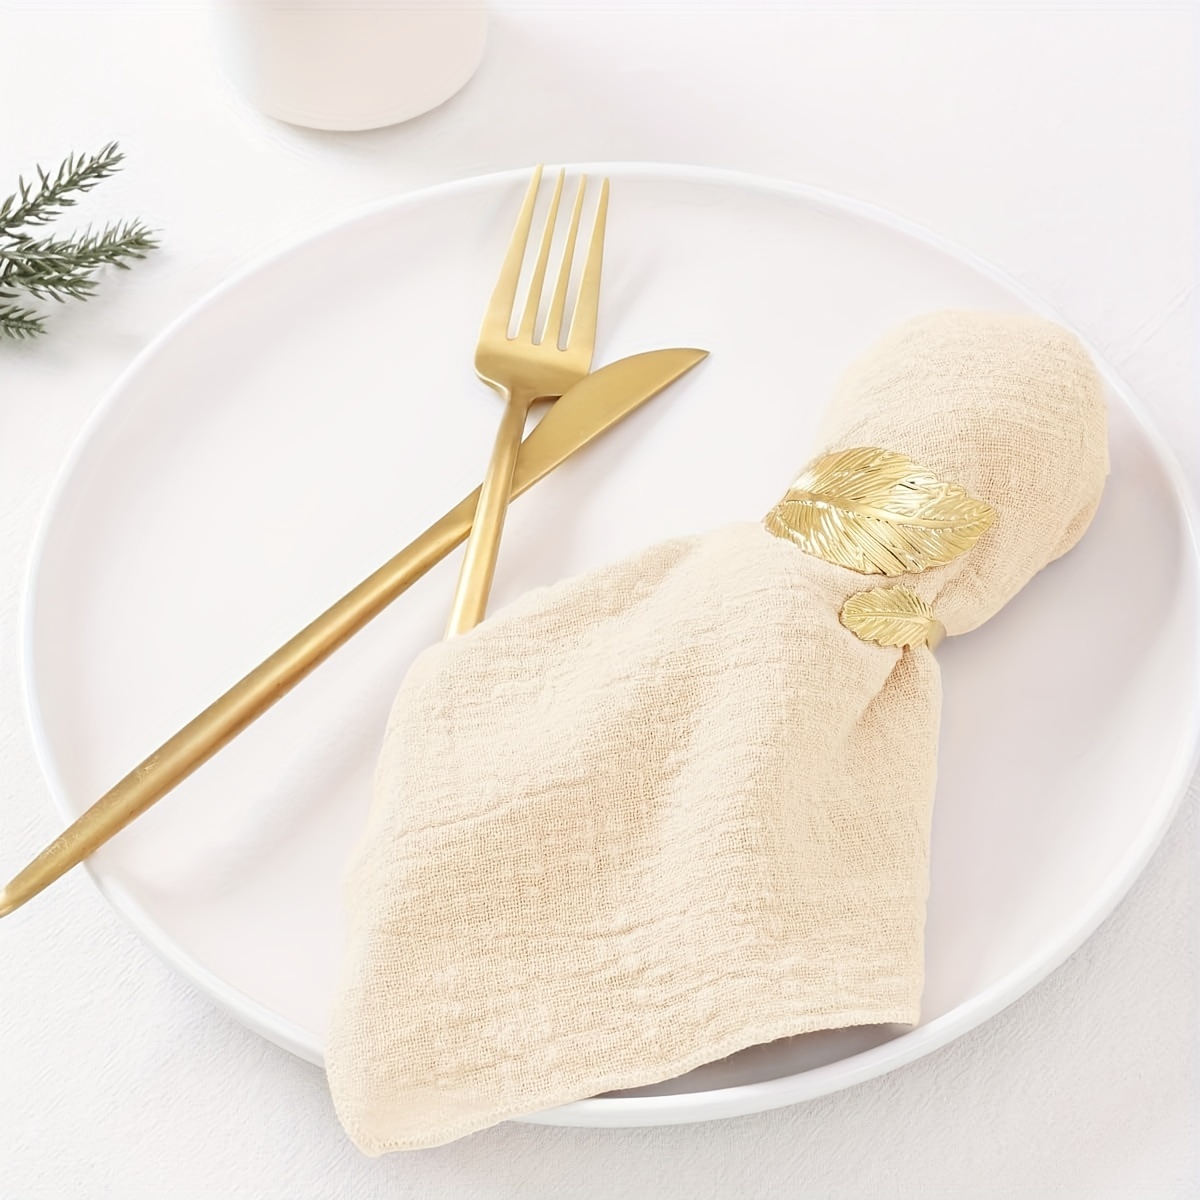  MFSMQJ 10 servilletas de tela para decoración de boda, 18.9 in,  para cocina, mesa, cena, suministros de restaurante, pañuelo de poliéster  (color: estilo cinco) : Hogar y Cocina